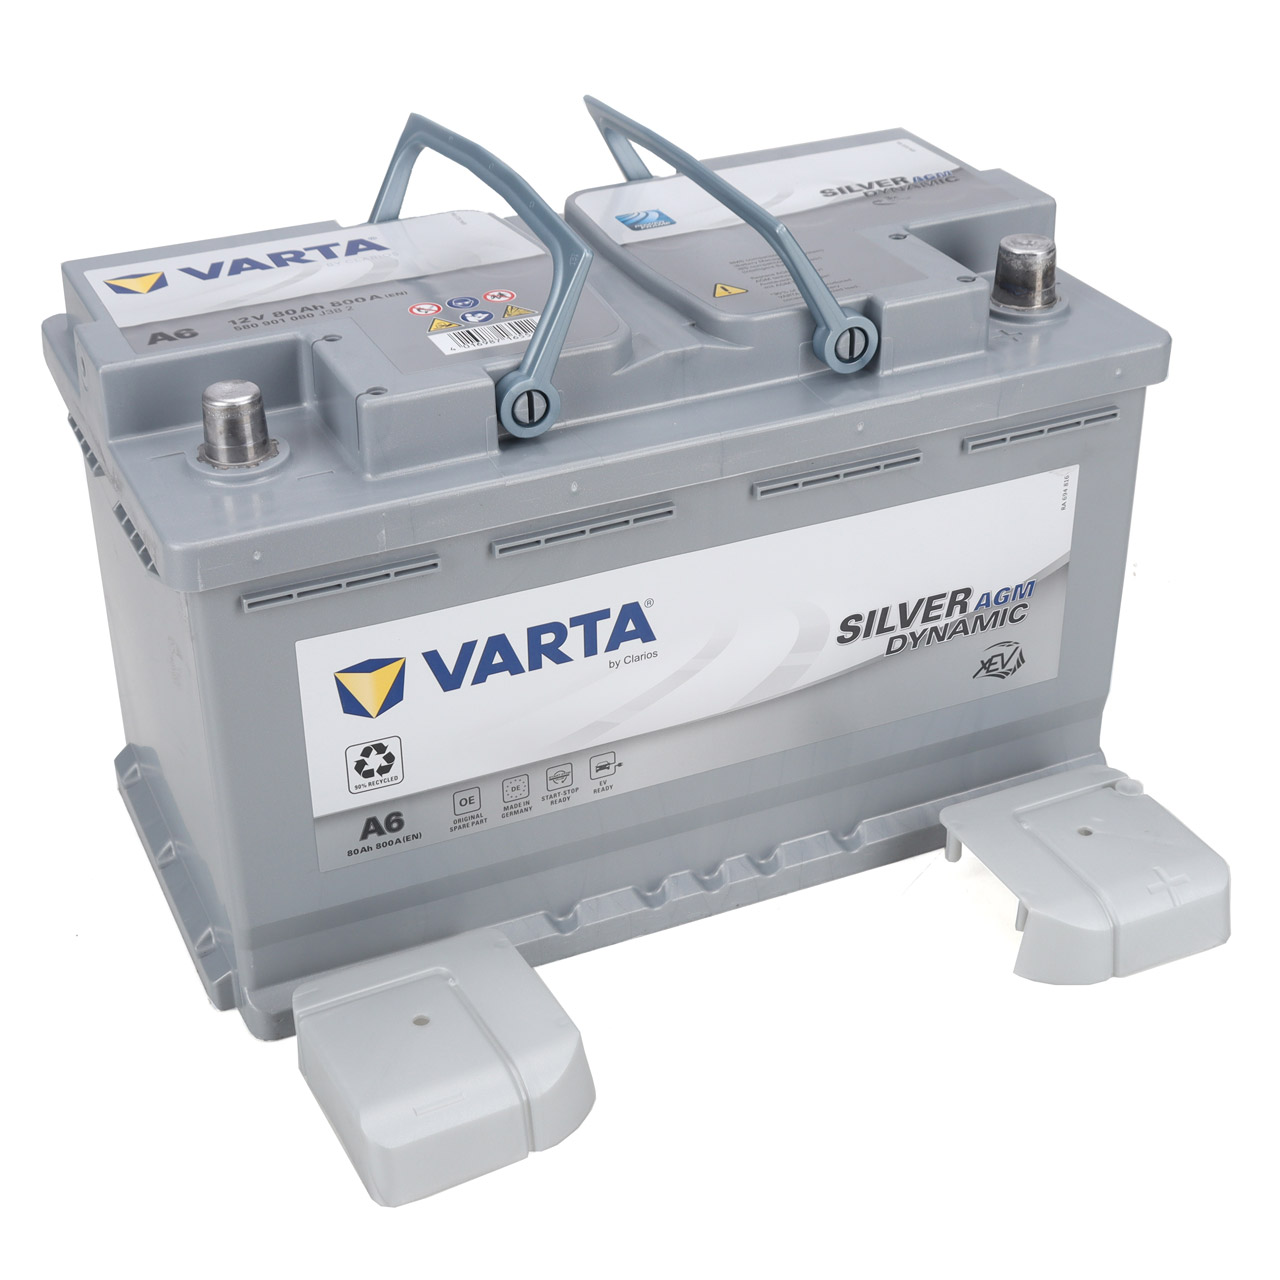 VARTA A6 SILVER dynamic AGM Autobatterie Starterbatterie 12V 80Ah EN800A